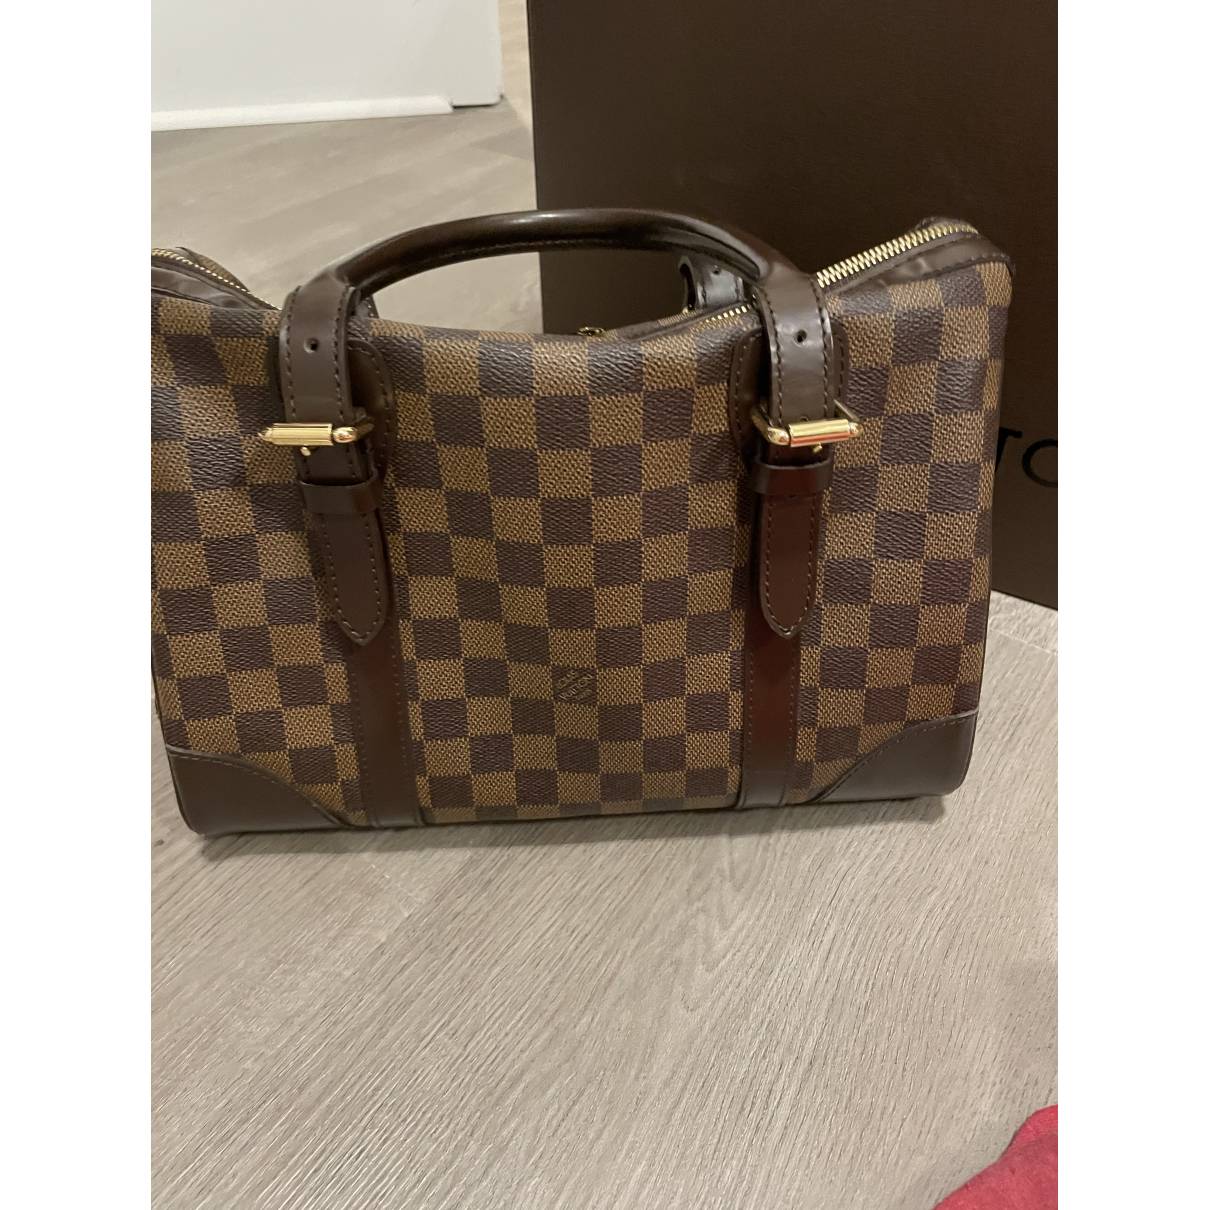 Louis Vuitton Damier Ebene Berkeley Bag - Handle Bags, Handbags